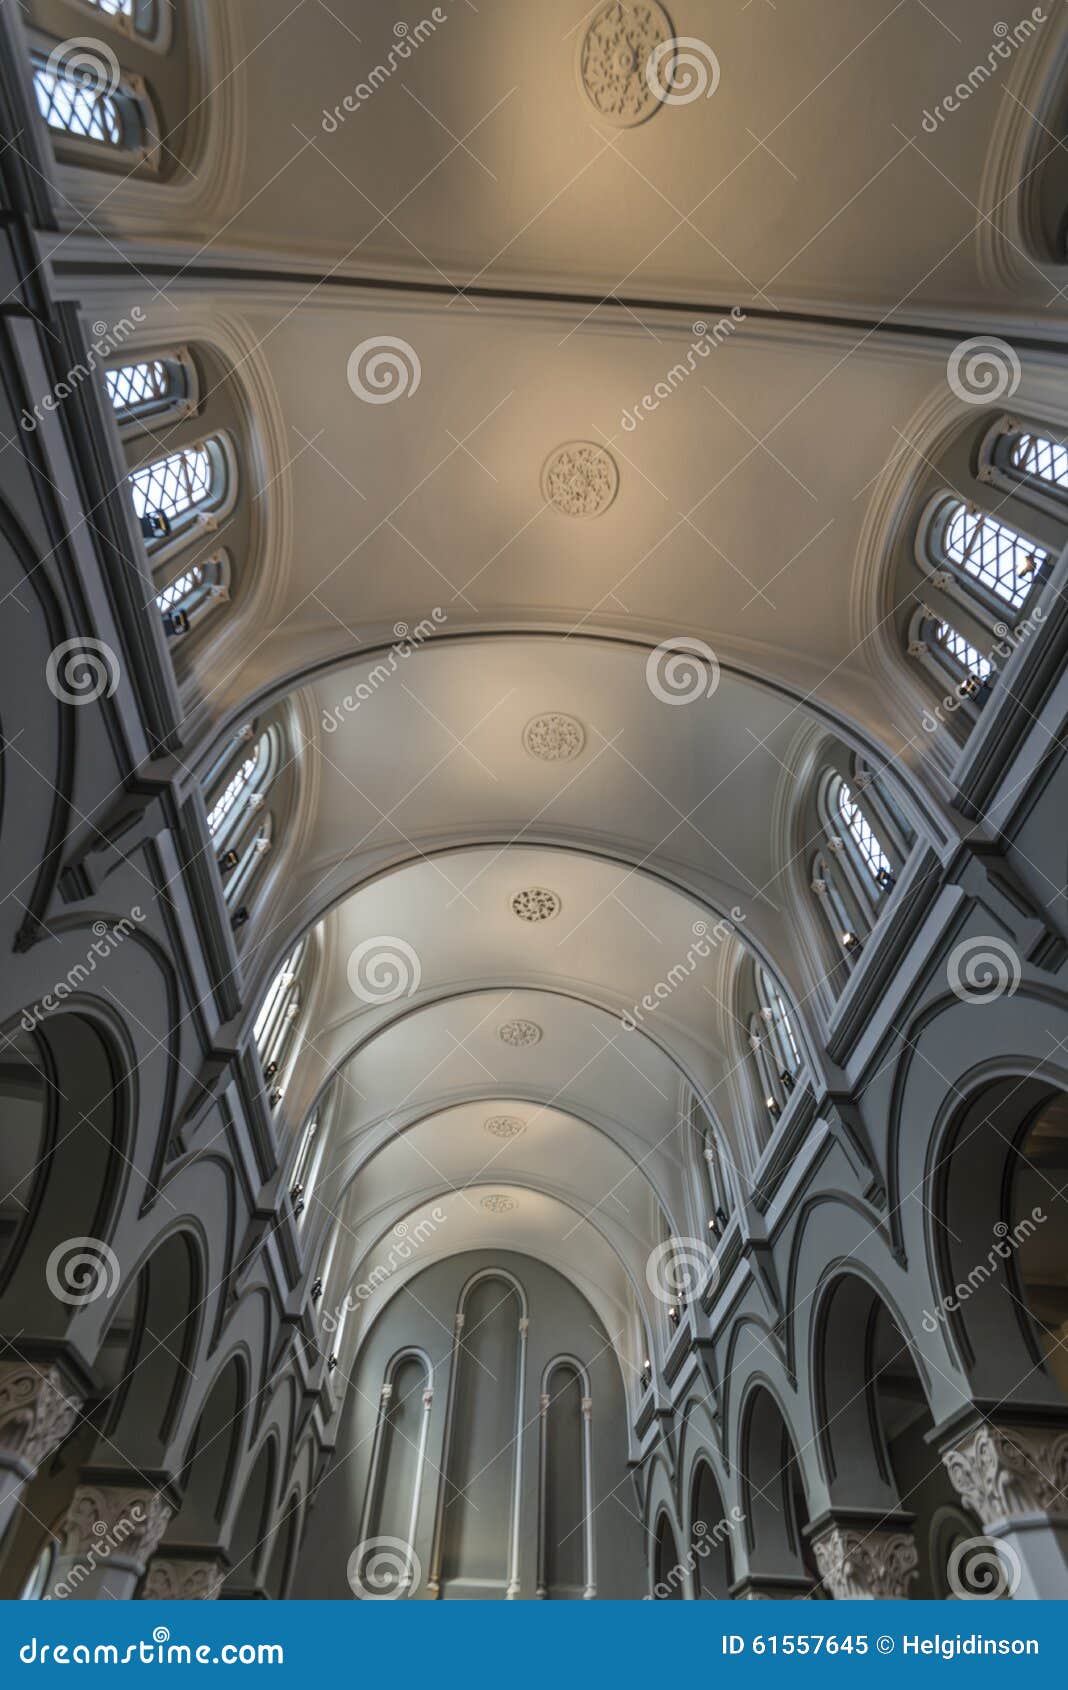 An elegant view of a barrel ceiling of a church